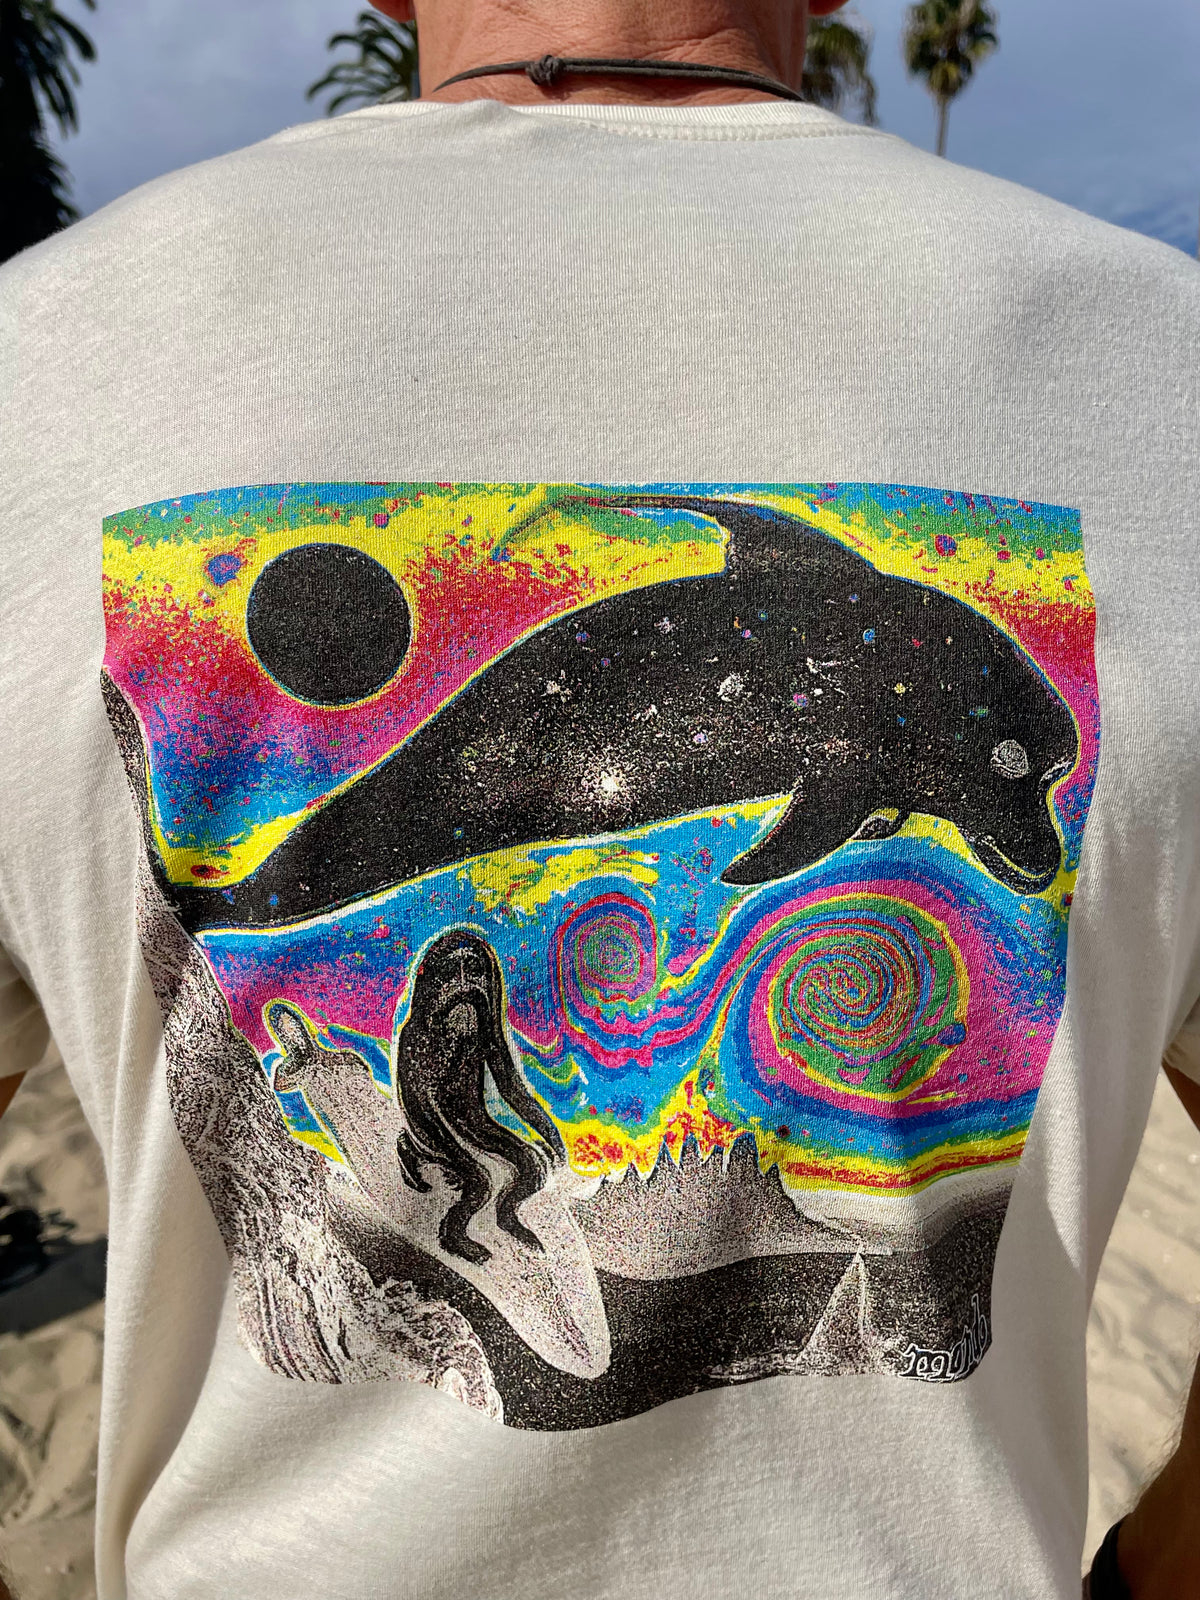 LUNA x 𝙈Ⓞ𝙉𝘿Ⓞ Surf Art Collab Unisex Shirt - LUNA Sandals